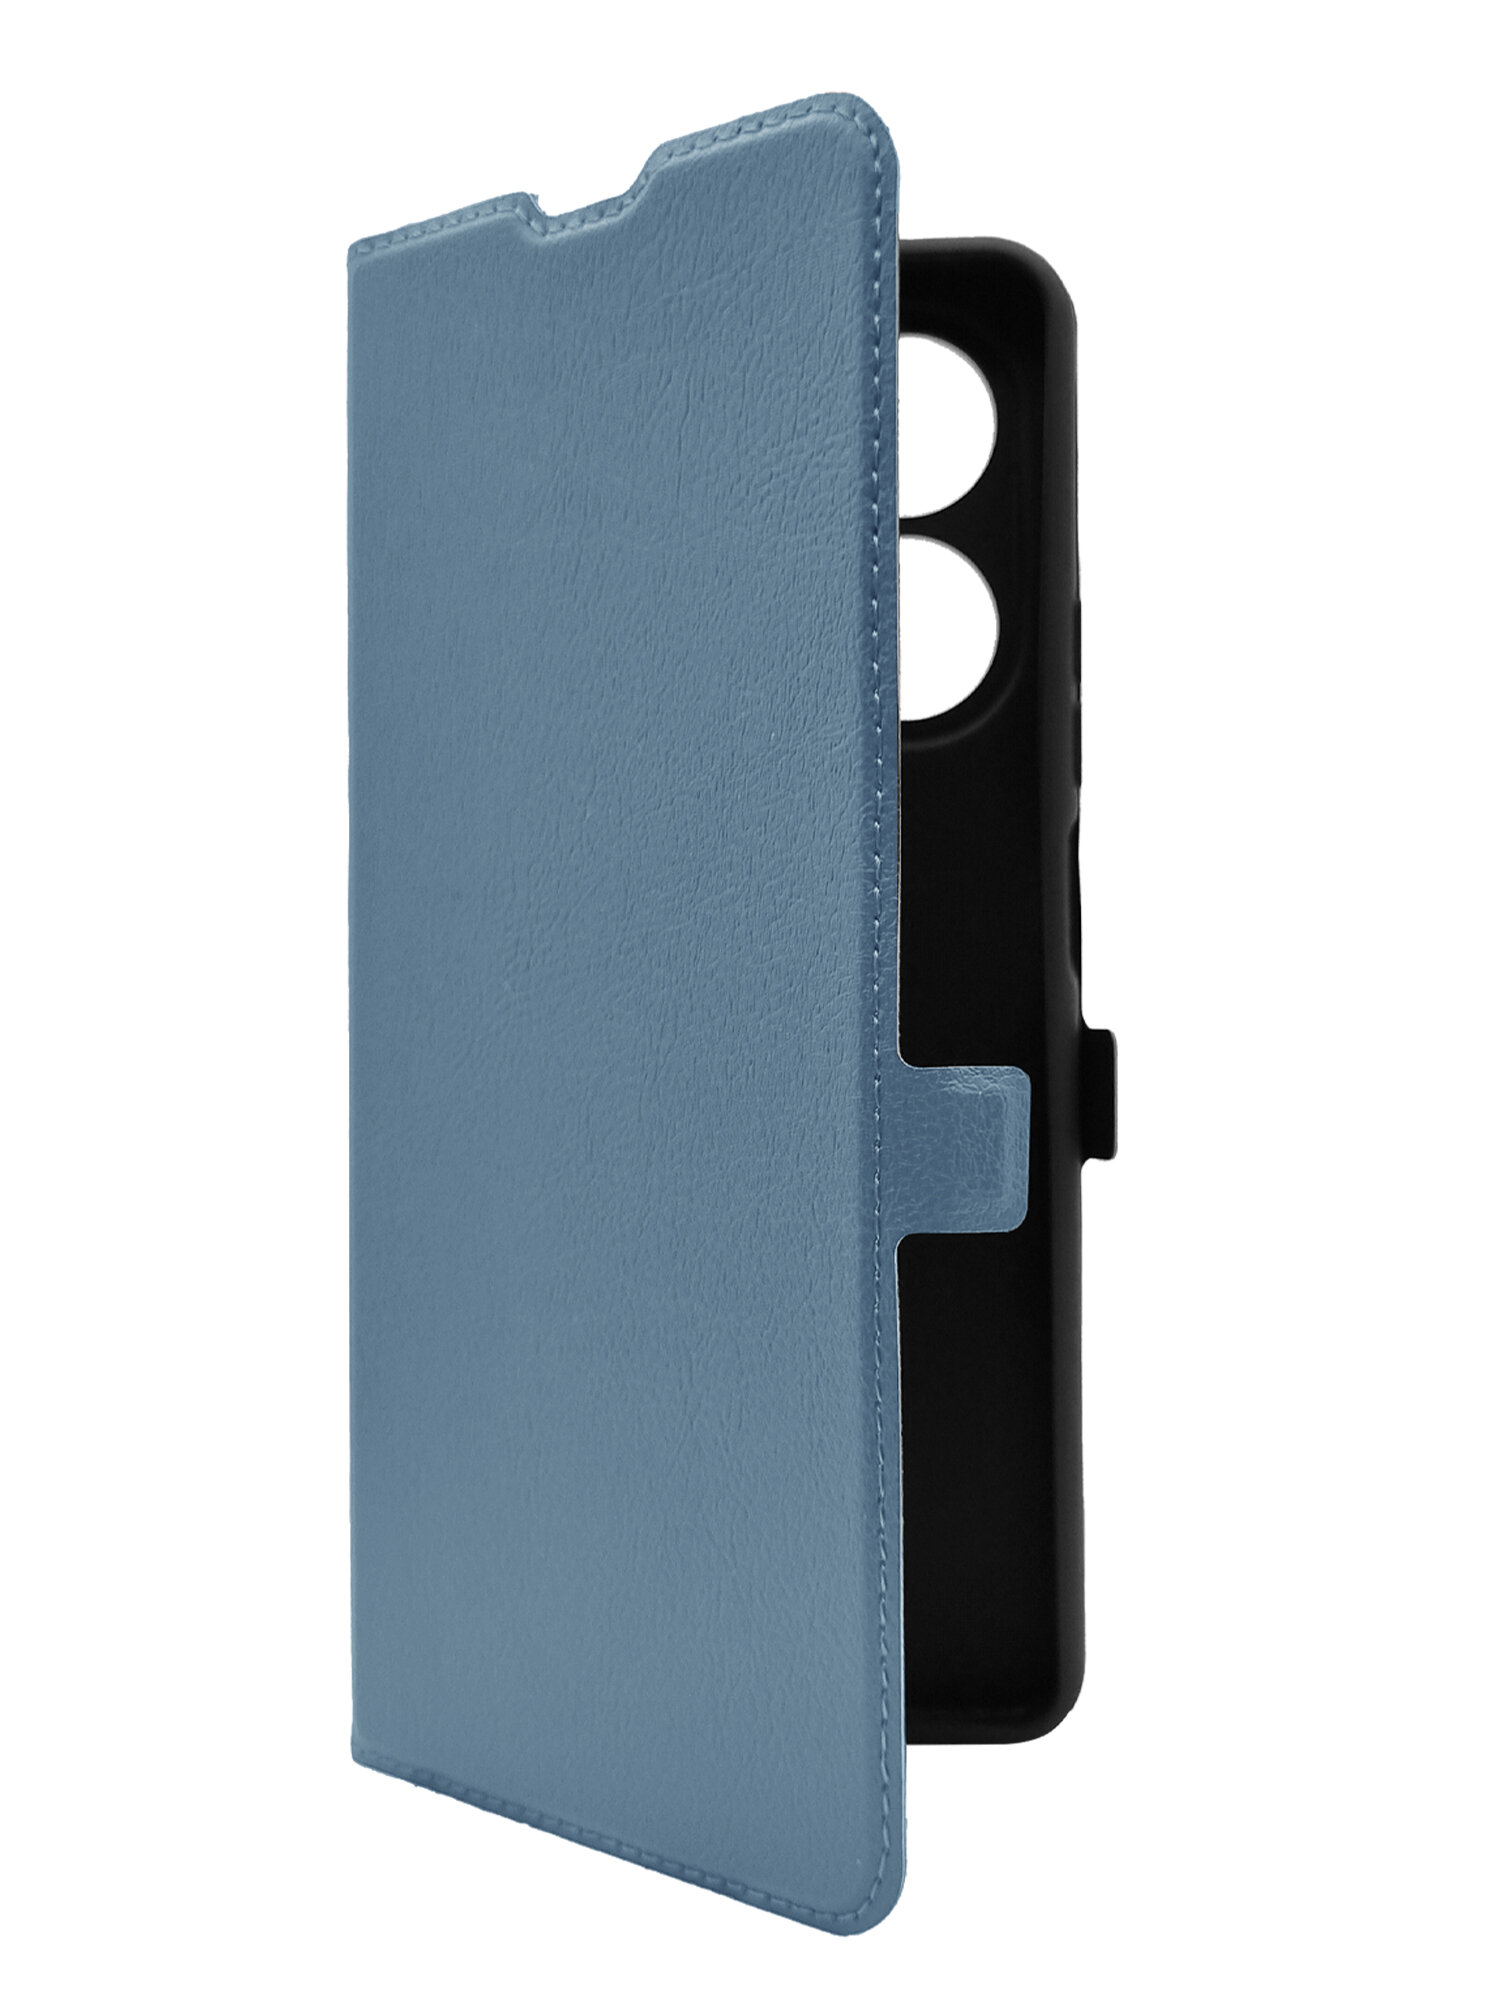 Чехол на Tecno Spark 20 Pro (Техно Спарк 20 Про) синий книжка эко-кожа с функцией подставки отделением для карт и магнитами Book case, Brozo